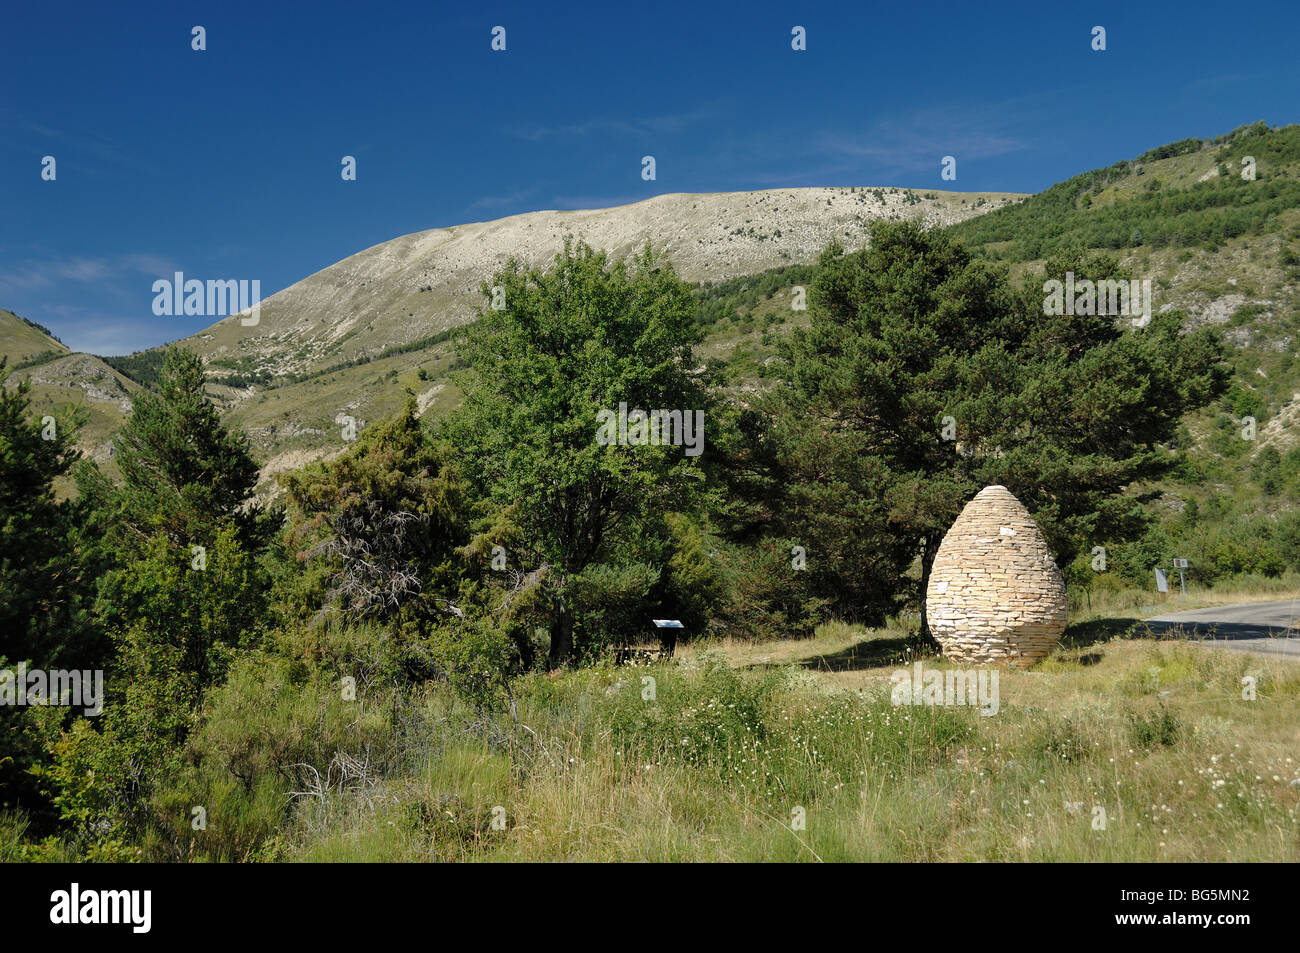 Andy Goldsworthy Landart or Dry Stone Cone Sculpture, Clumanc, Asse Valley, Alpes-de-Haute-Provence, France Stock Photo